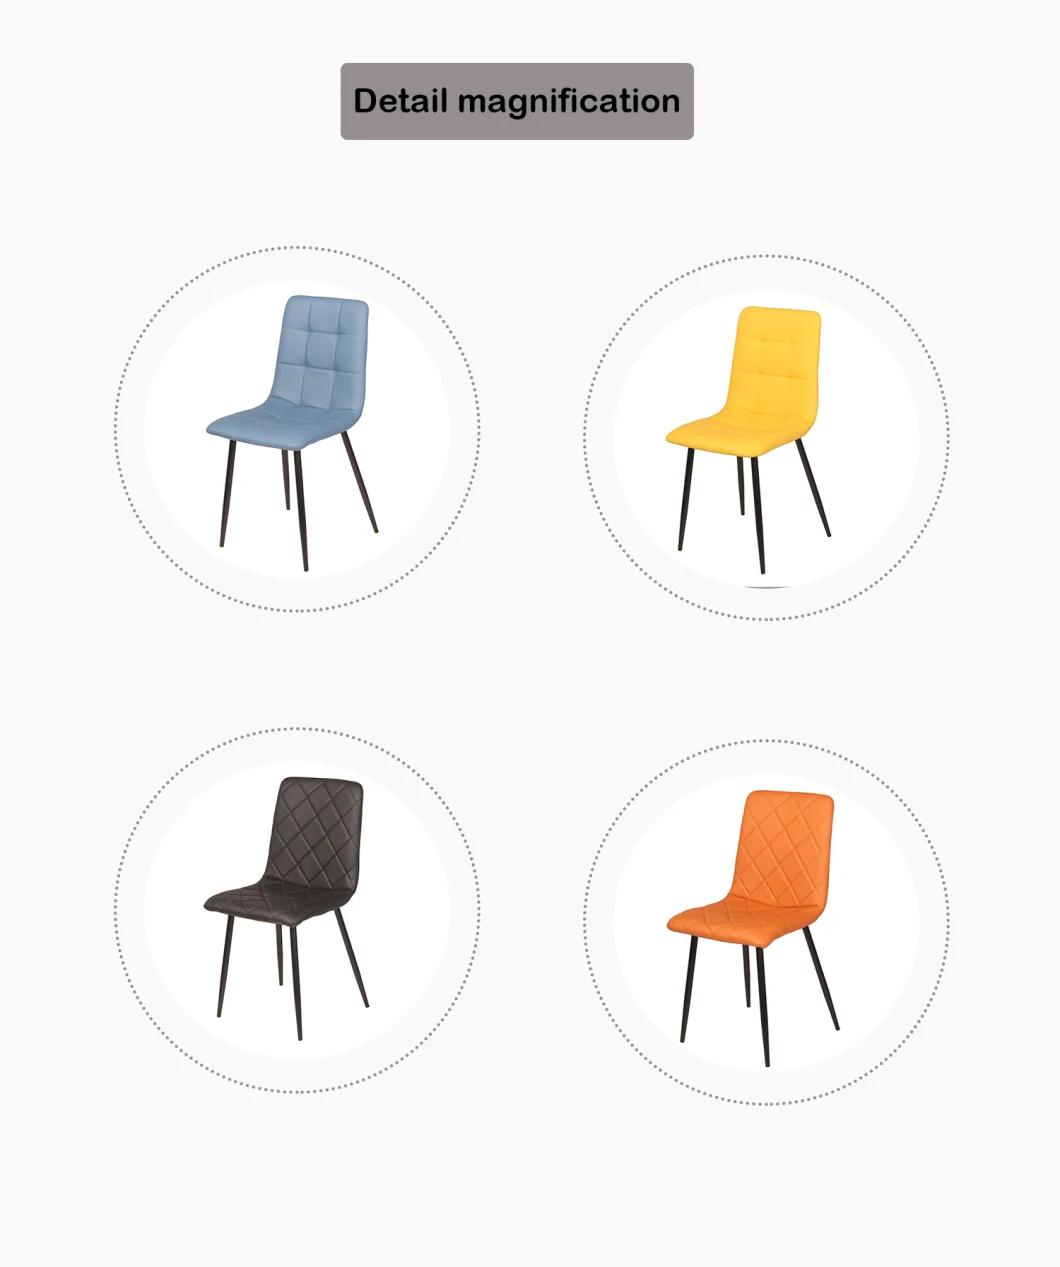 Modern Style Velvet Cushion Home Furniture Nordic Denmark Mark Polish Style Dining Chair